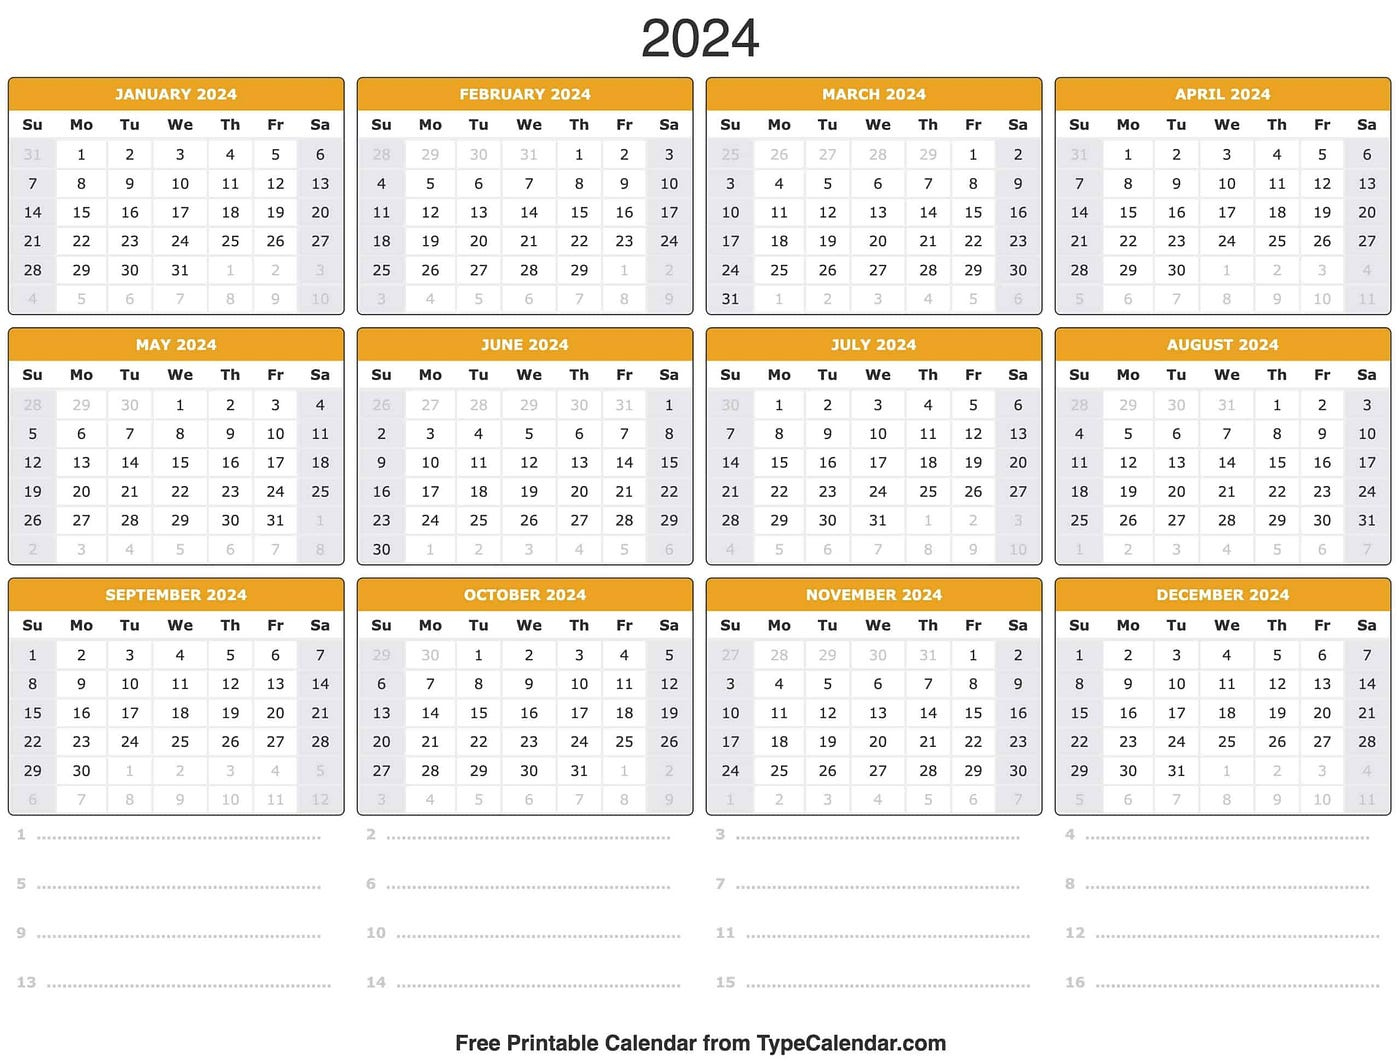 Free Printable 2024 Calendar Templates |Helena Orstem | Medium | Free Printable Calendar Templates 2024